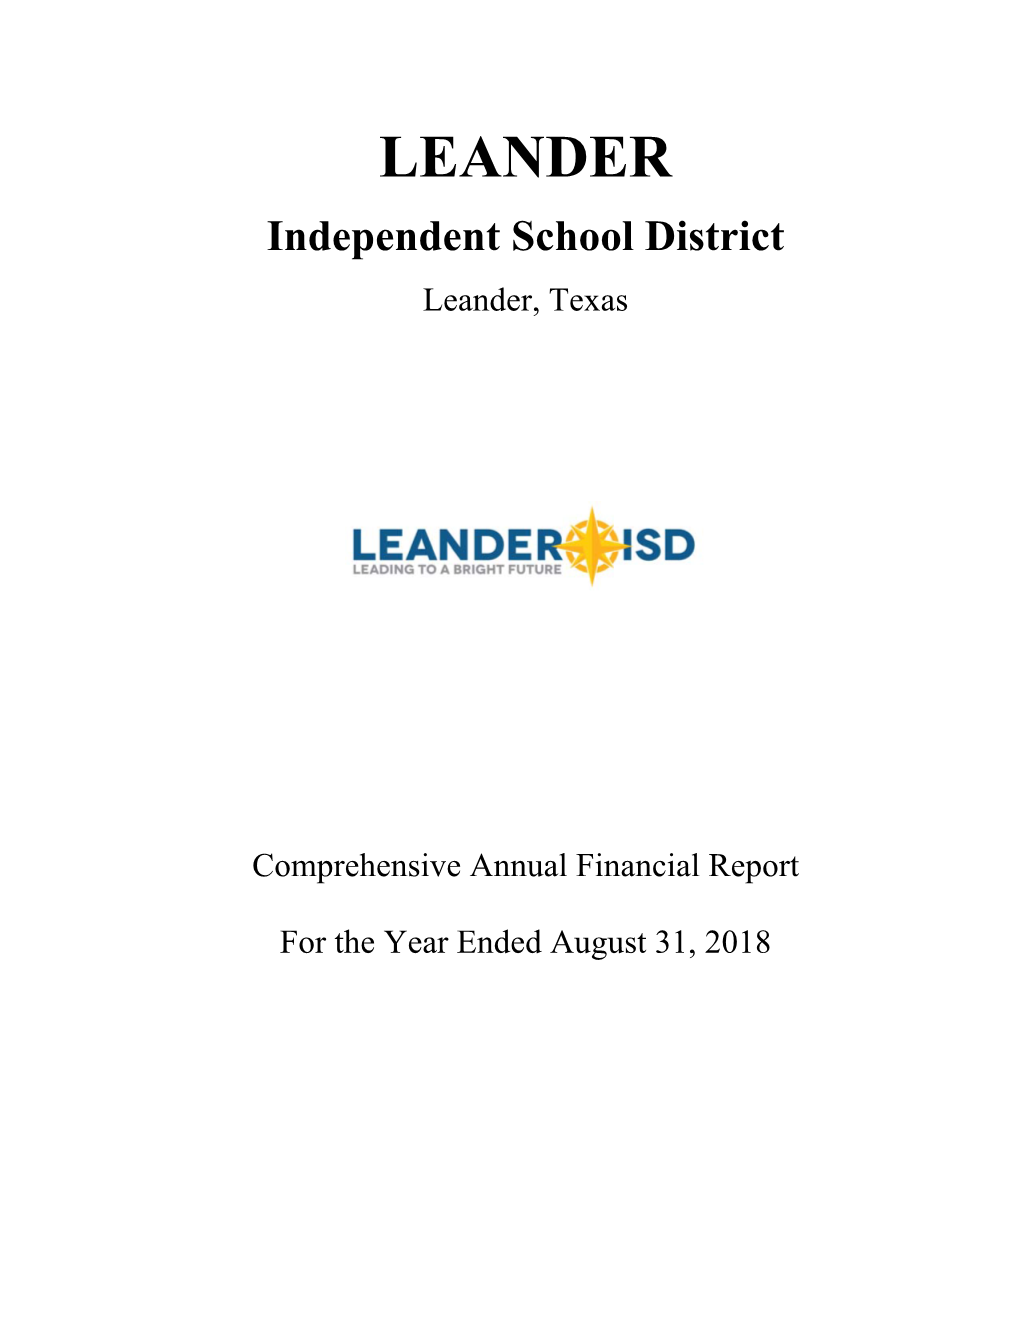 LEANDER Independent School District Leander, Texas